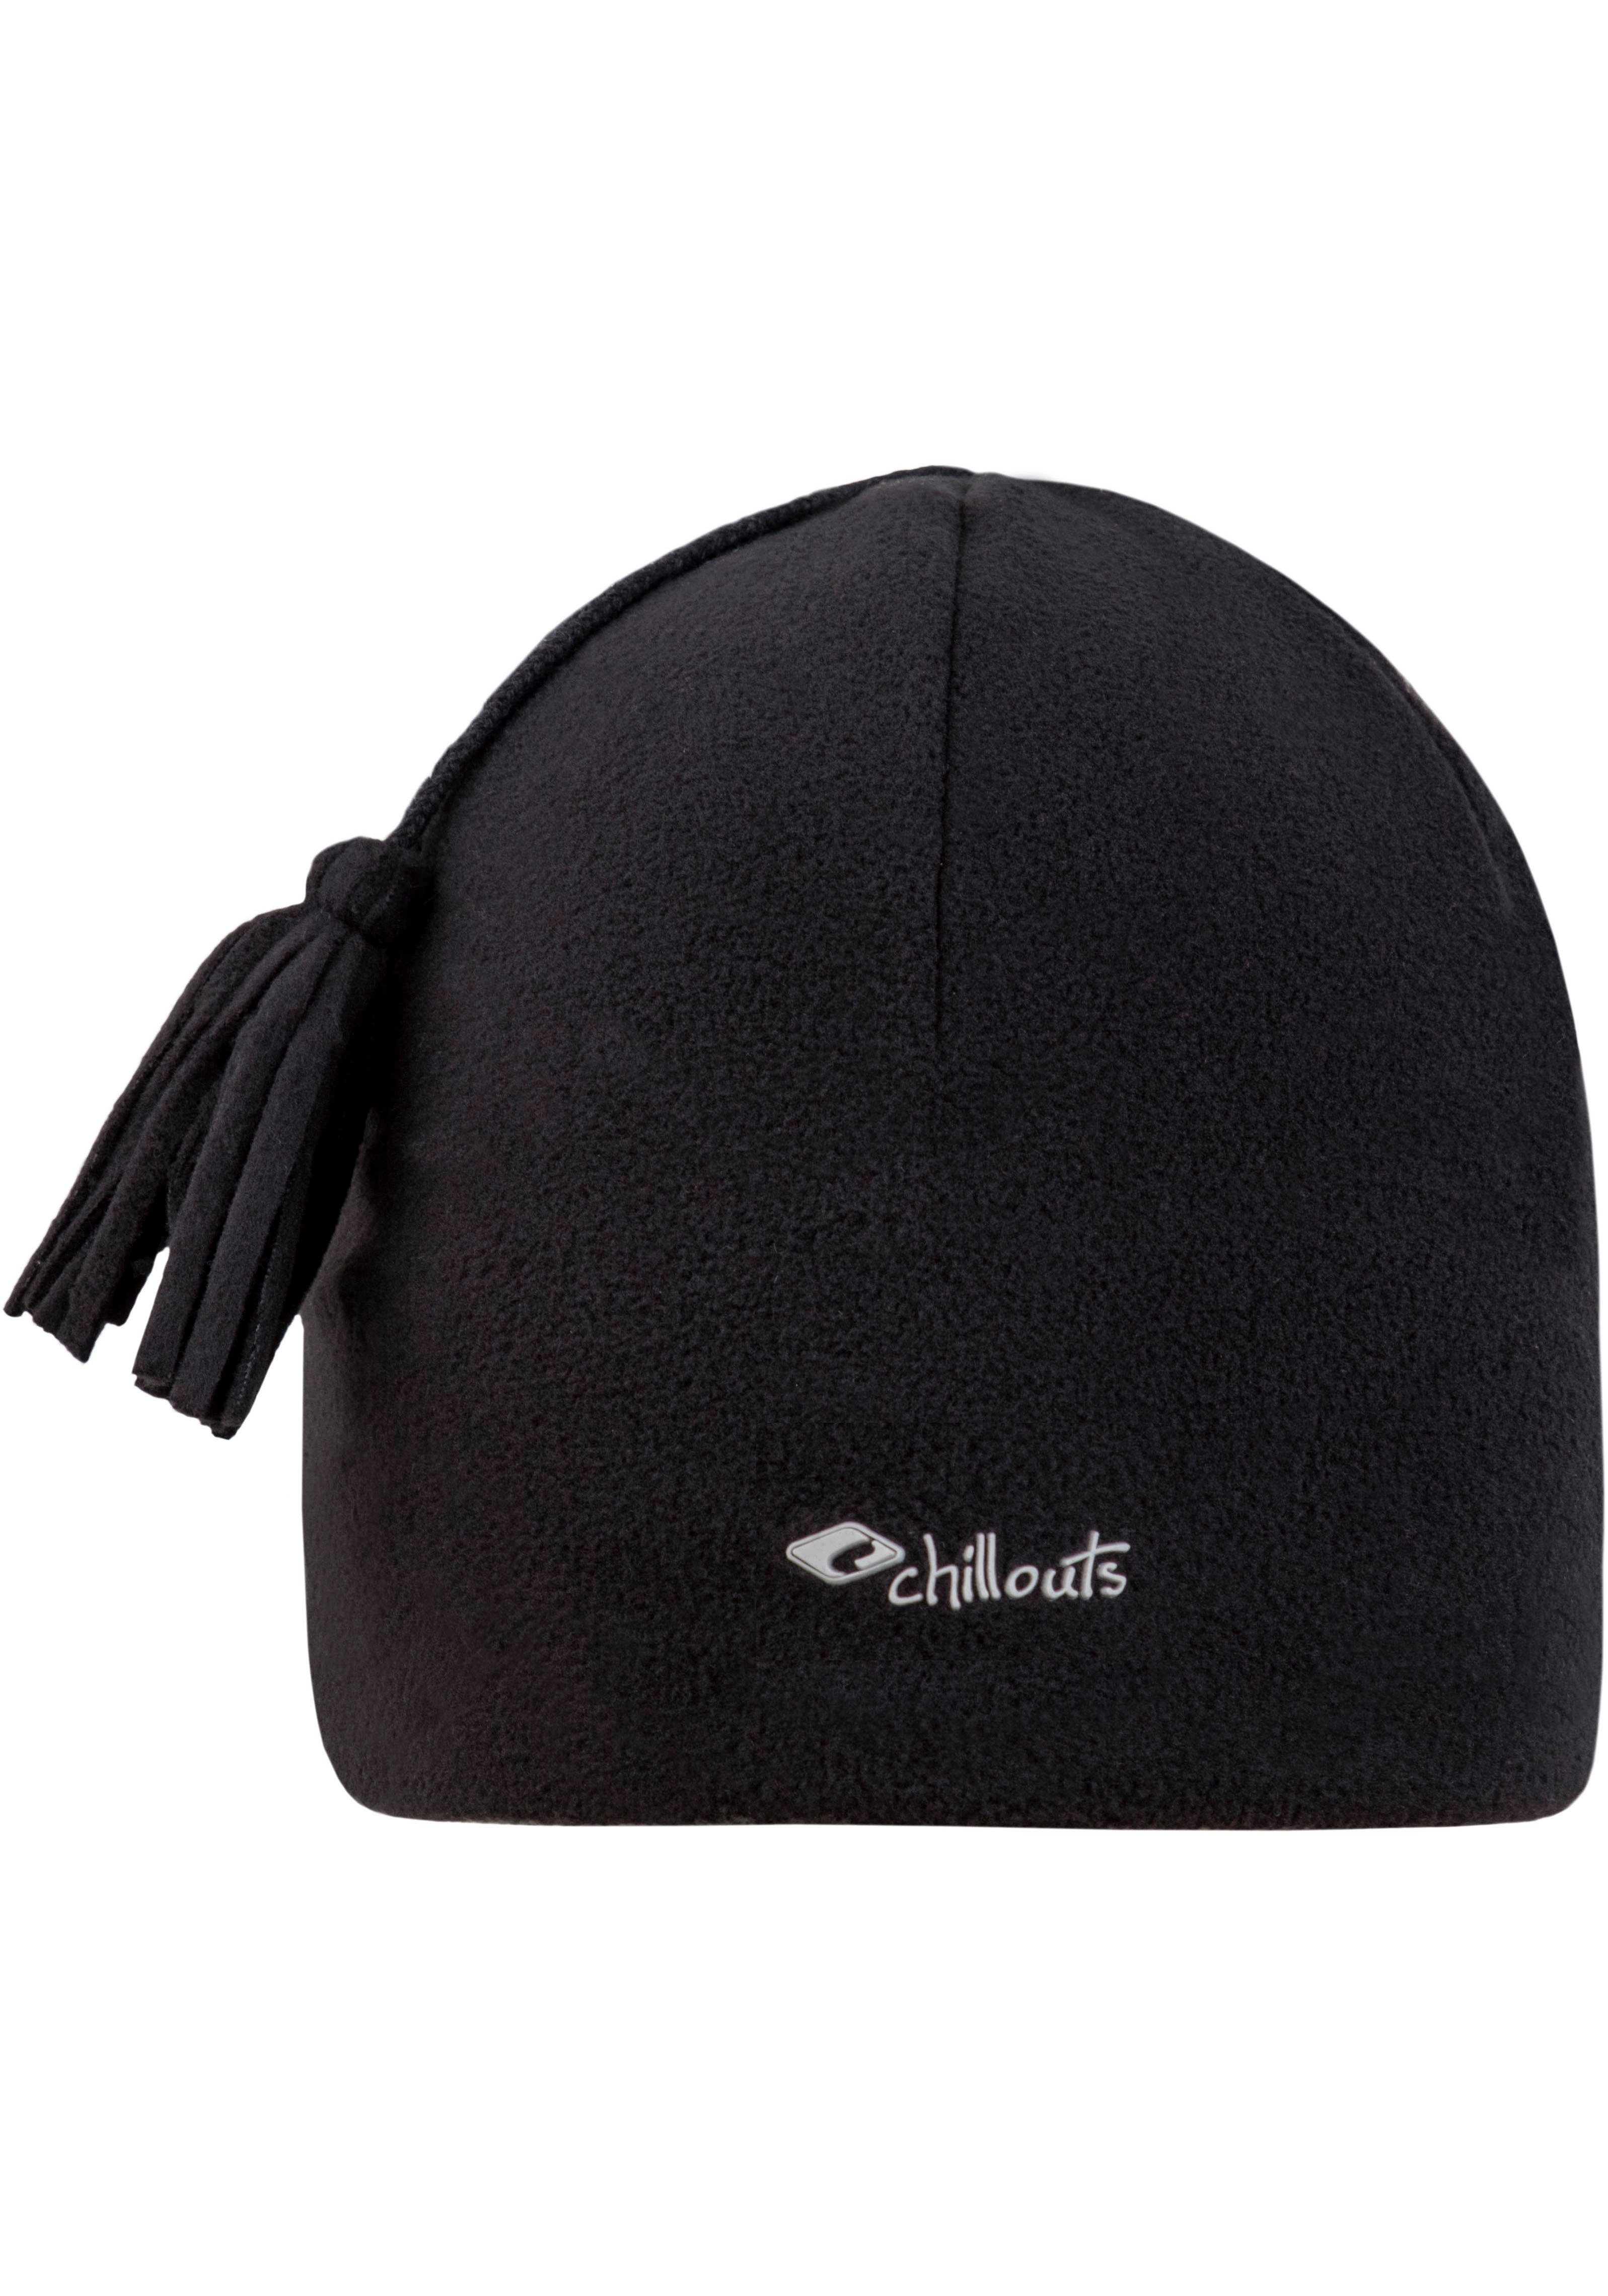 Pom Freeze chillouts black Fleece Hat Fleecemütze